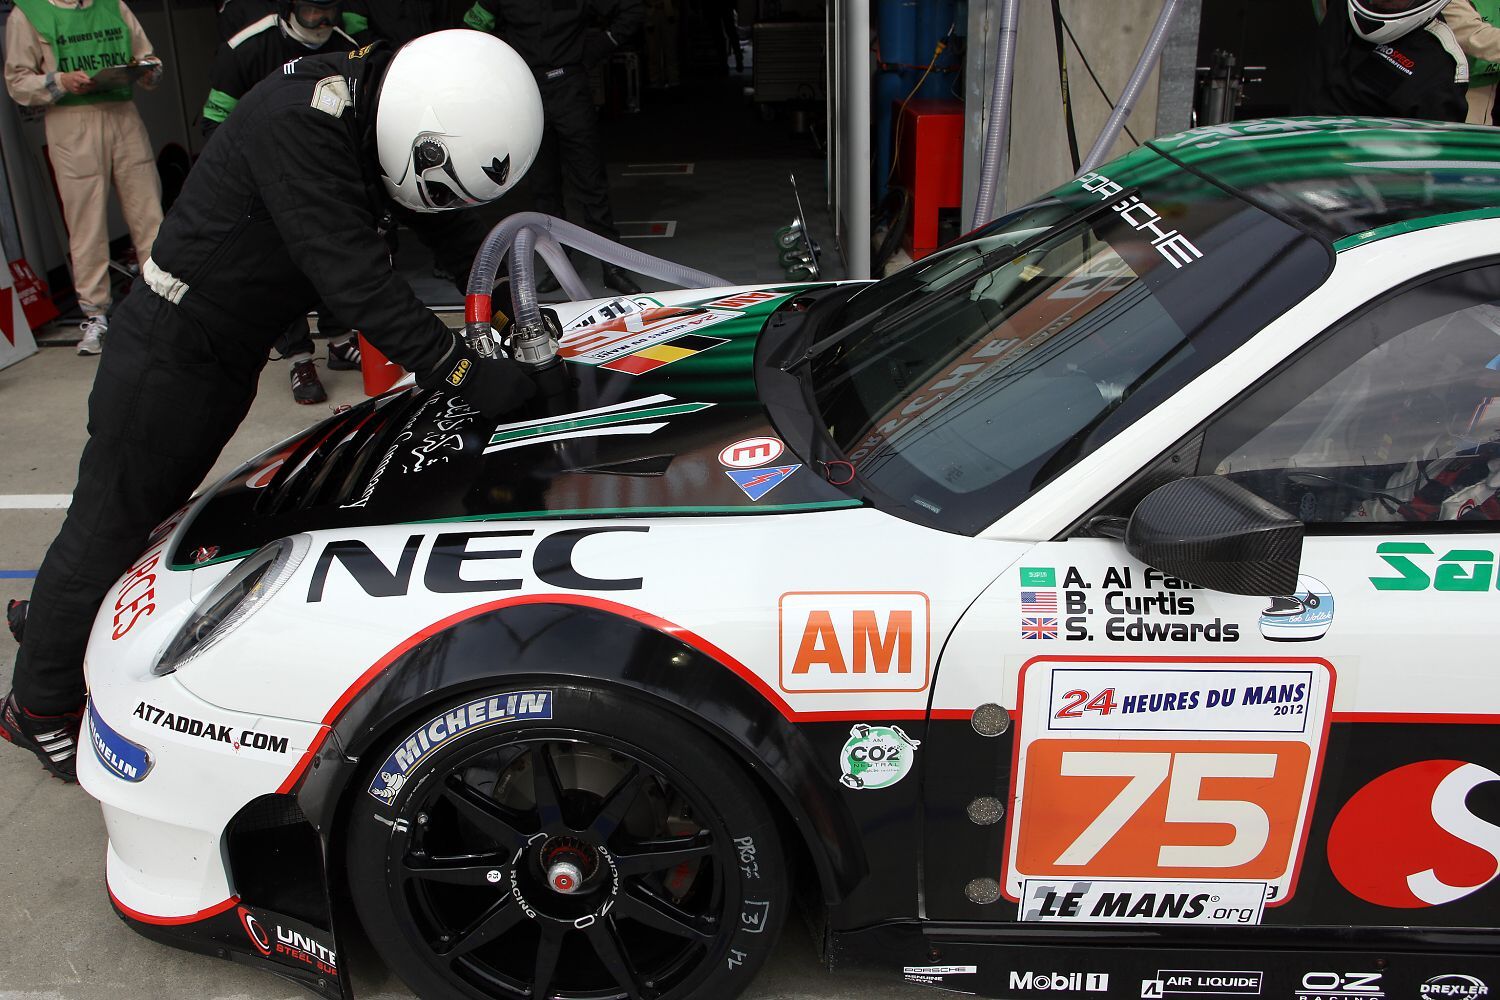 Alfaisal/Curtis/Edwards, IMSA Porsche